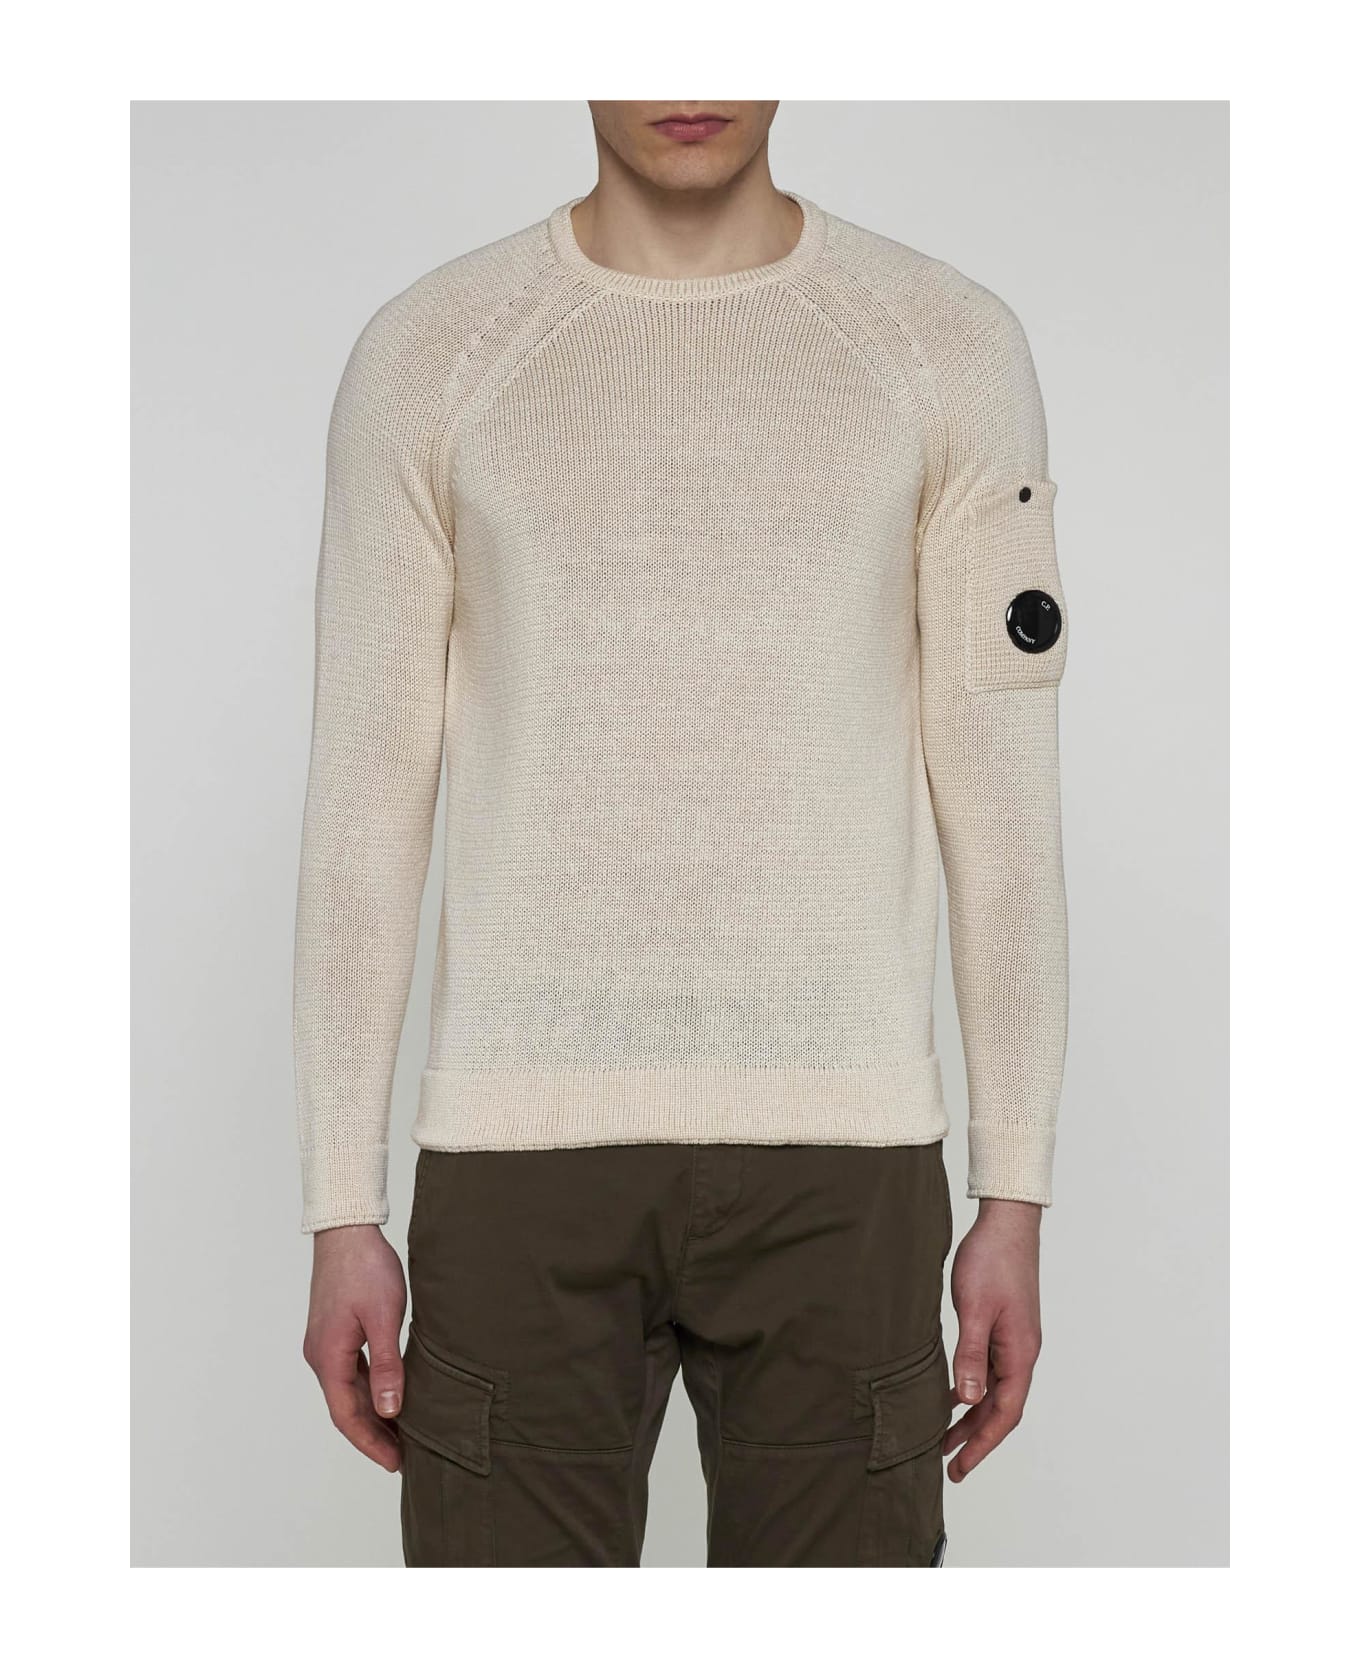 C.P. Company Cotton Sweater - PISTACHIO SHELL